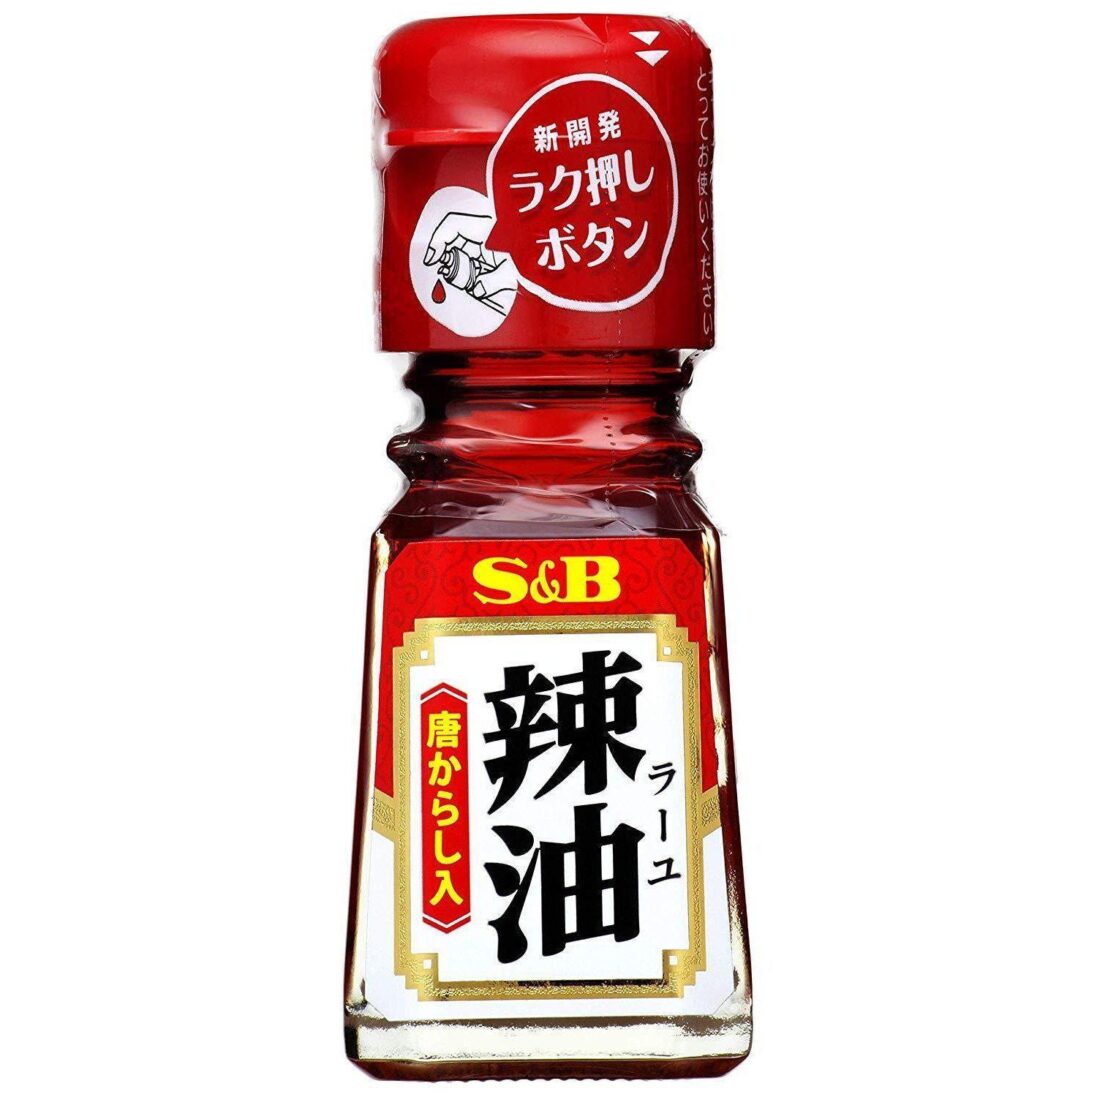 SB-Rayu-Japanese-Chili-Oil-31g-Japanese-Taste_f39da40d-66ee-4201-b114-295893da3b7d_2048x.jpg